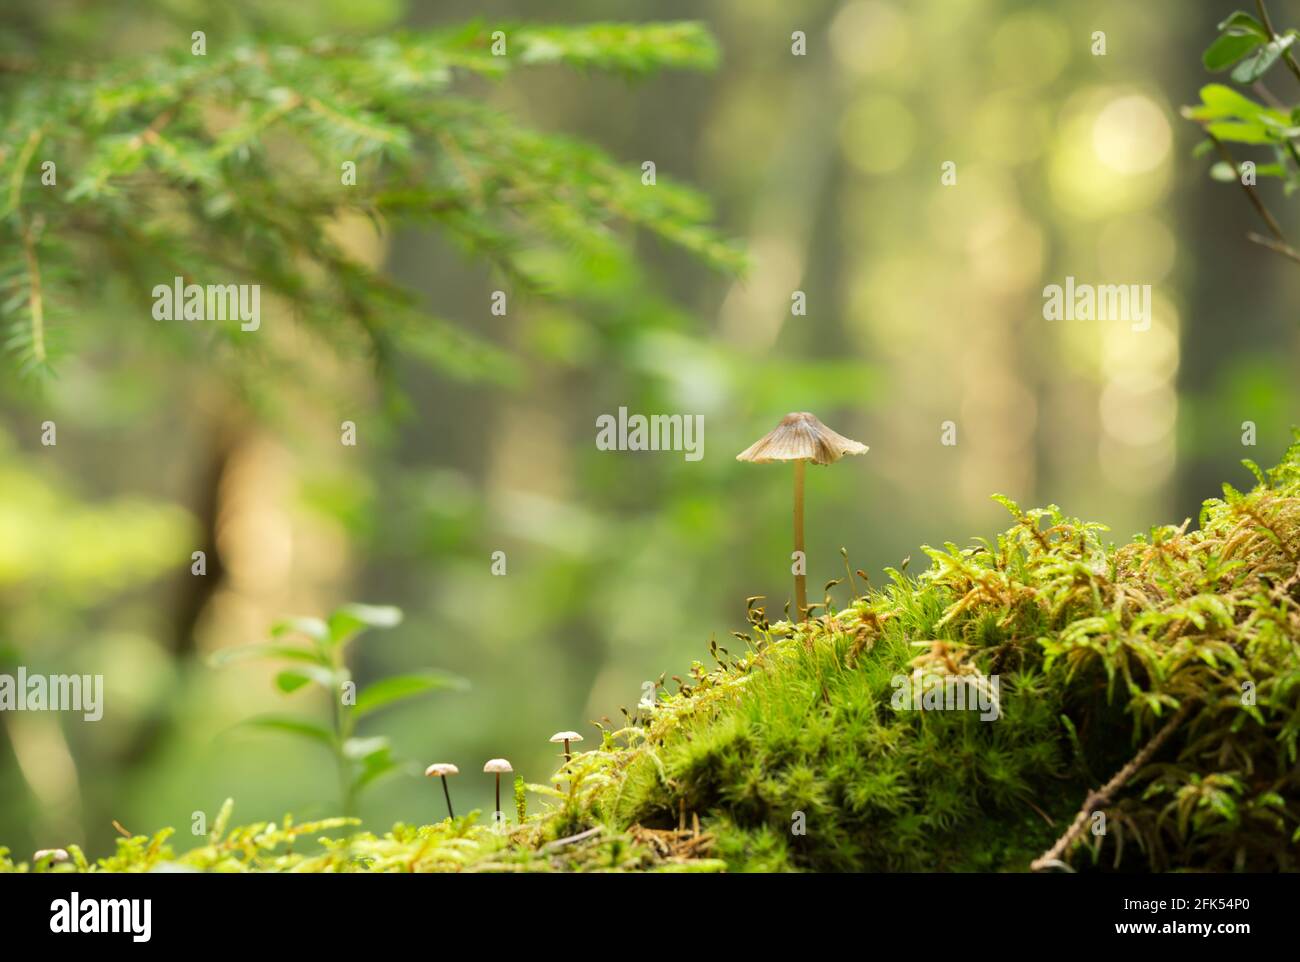 Mycena mushroom growing in moss in forest Stock Photo